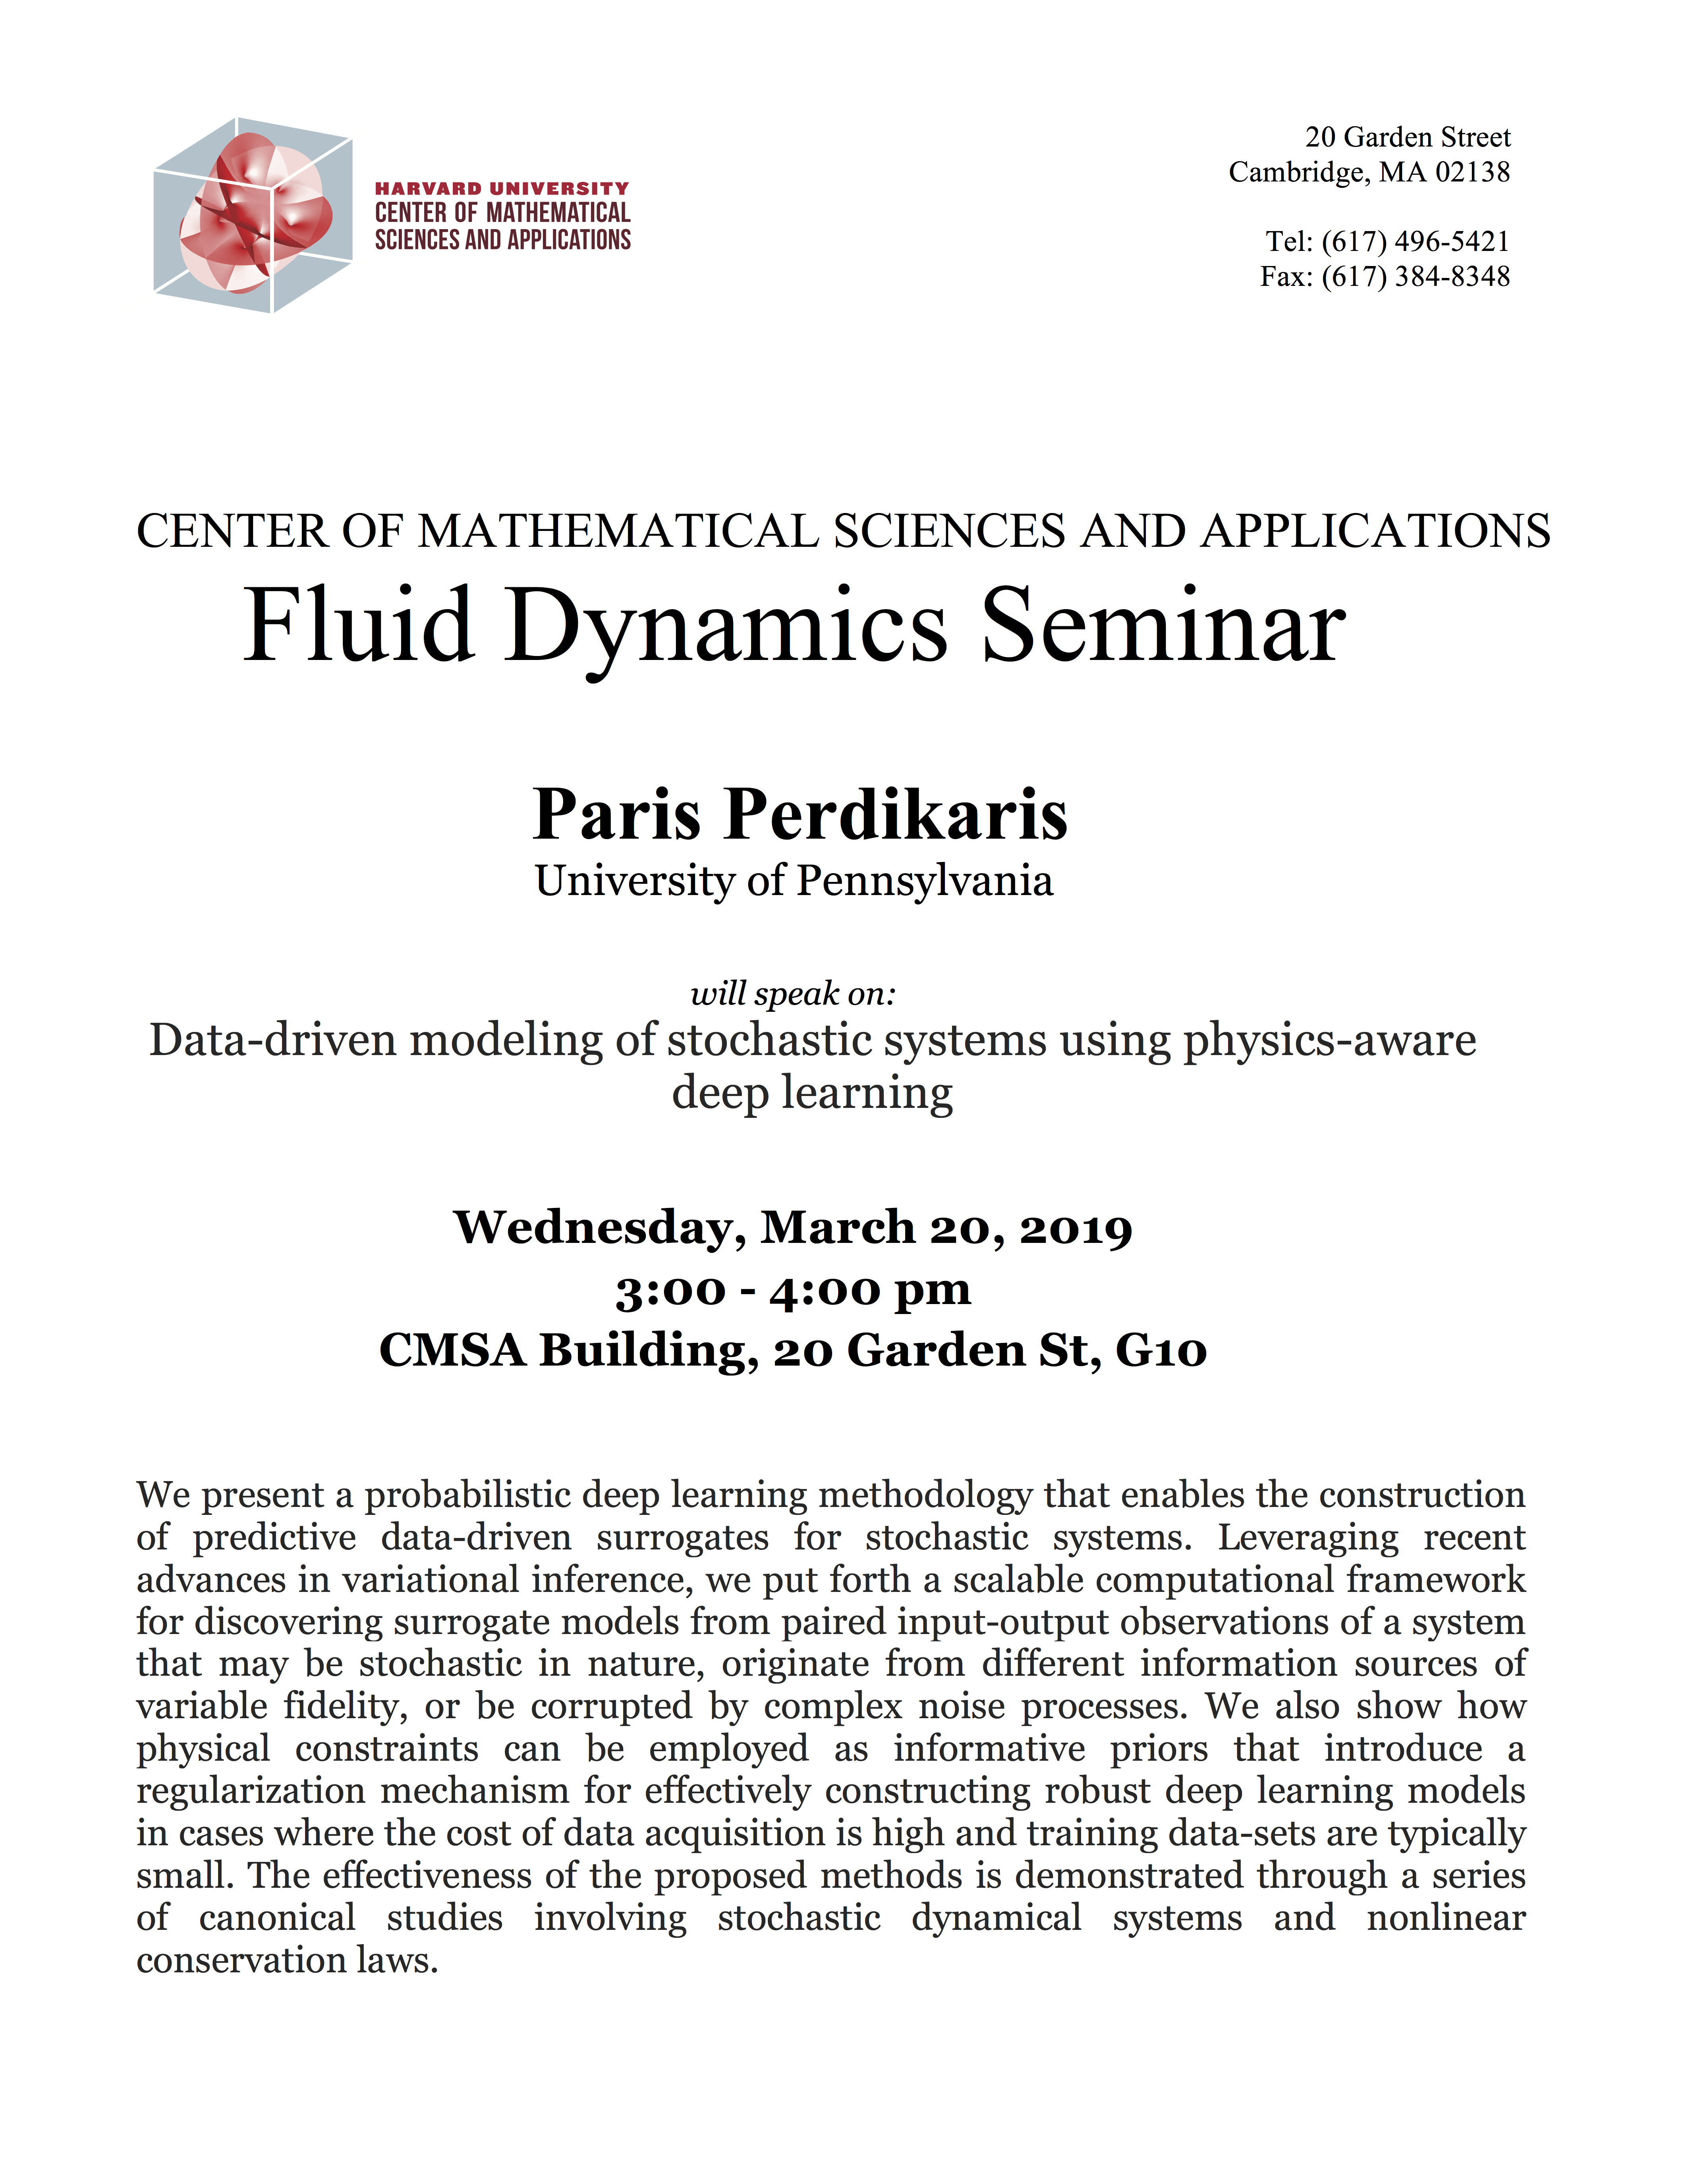 3/20/2019 Fluid Dynamics Seminar